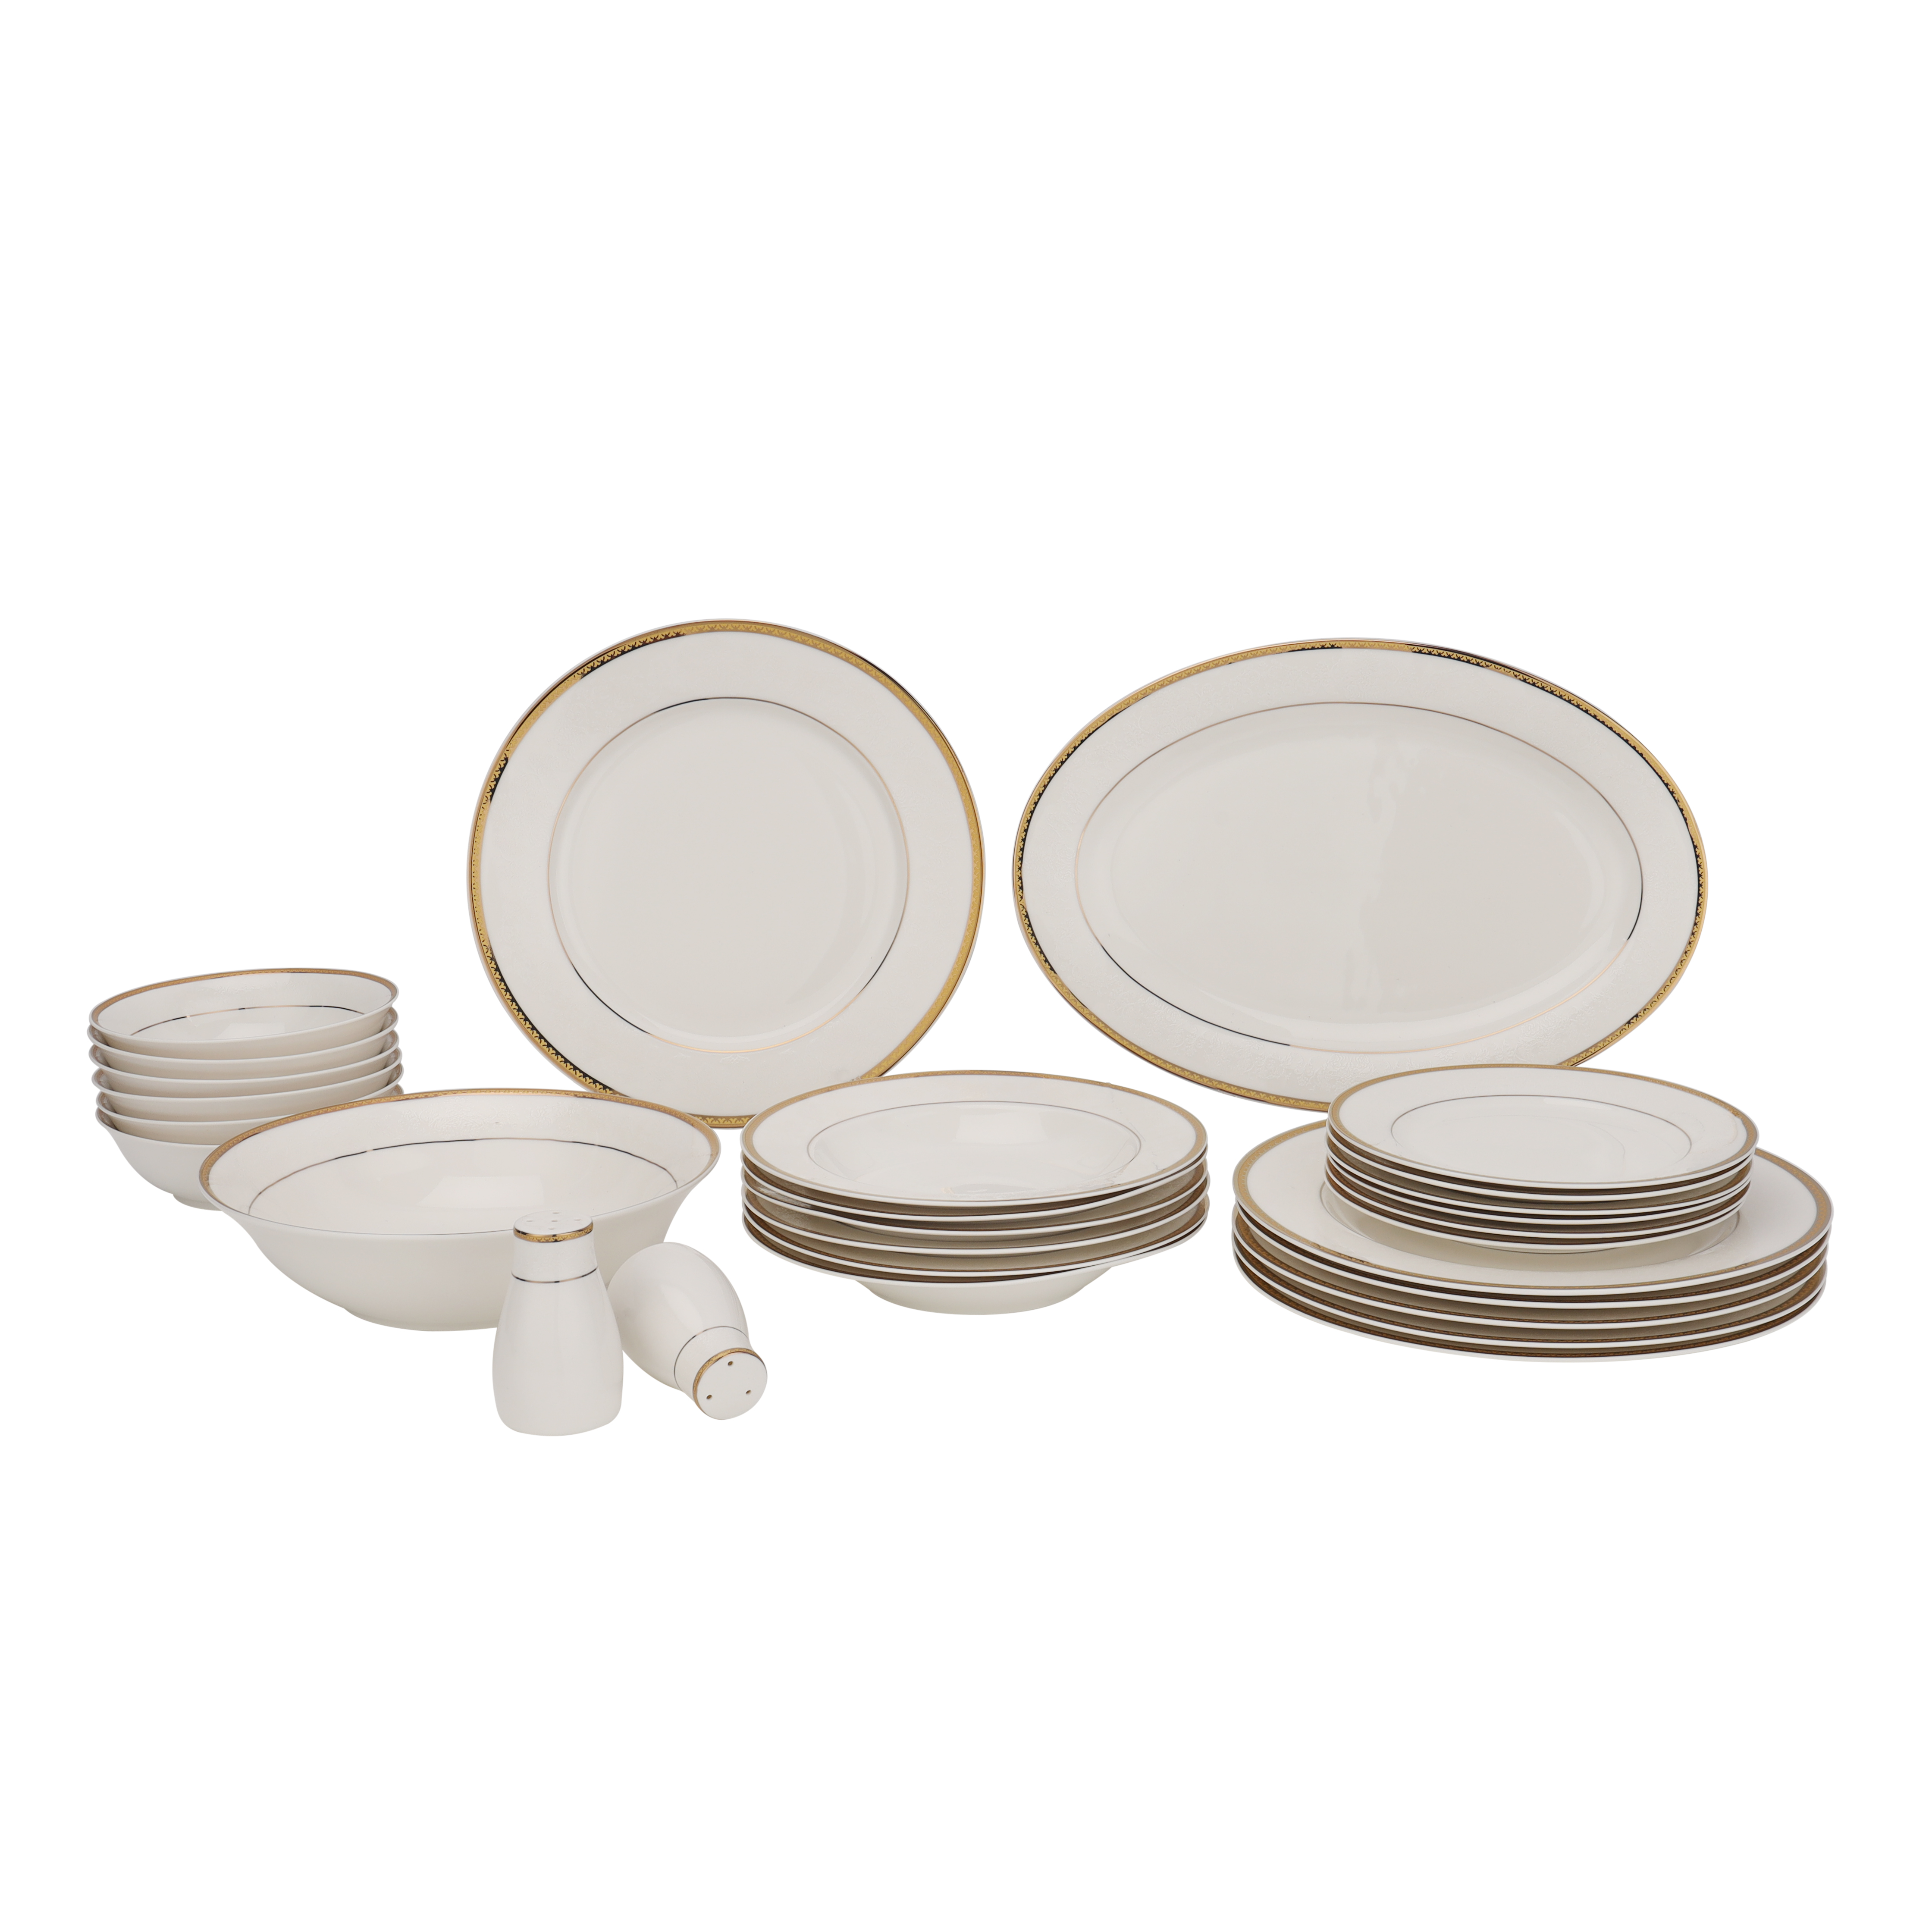 Luxury Tableware Set Royal Style Dinner Plates Set SBCHT726 Bone